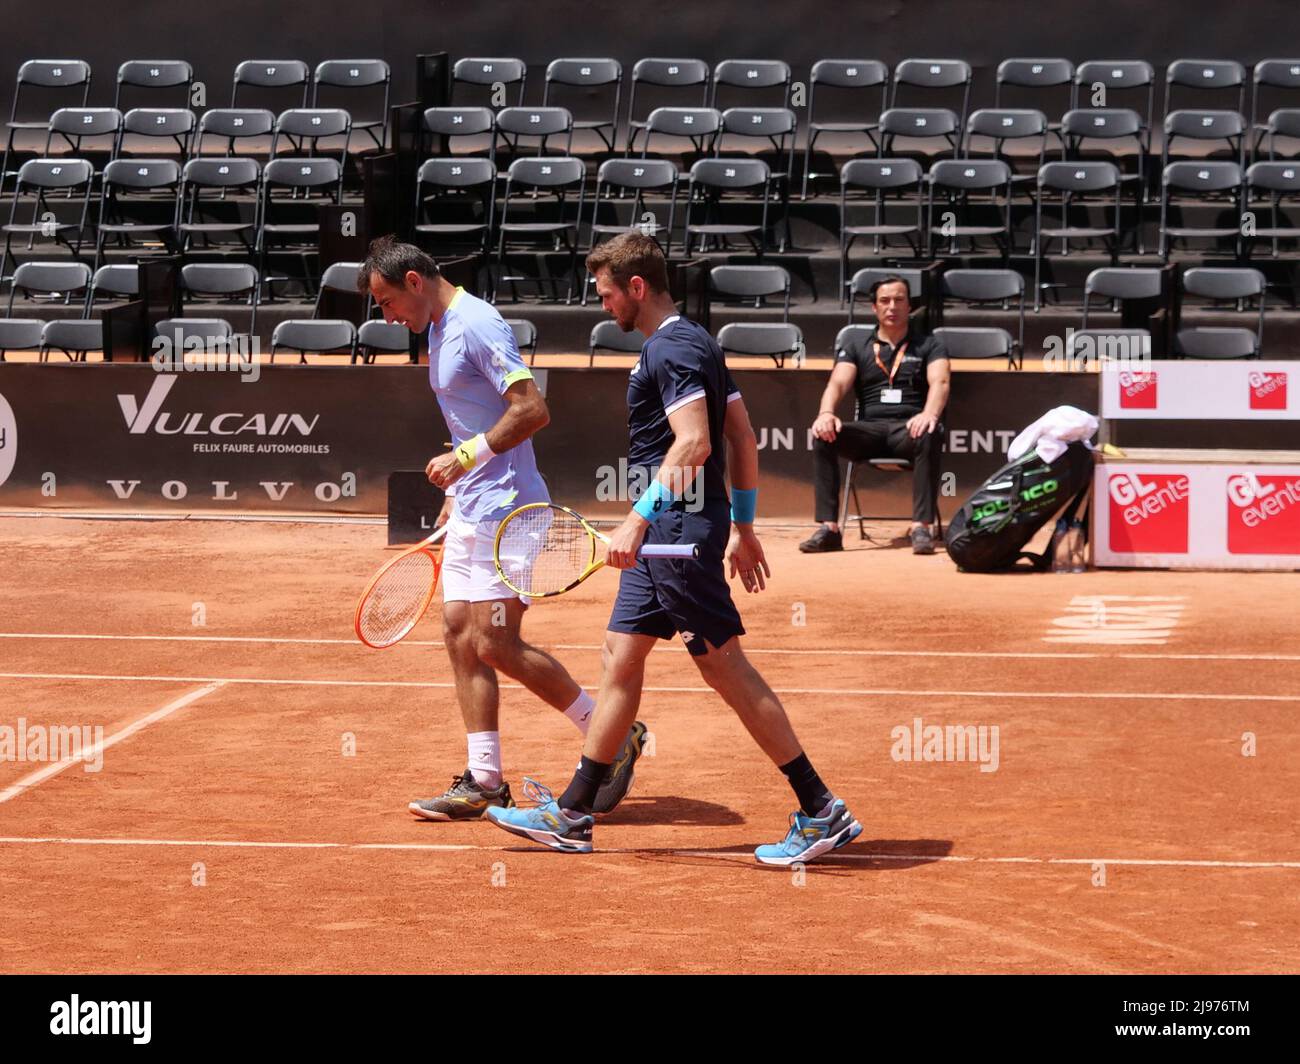 The Tennis Conversation: Austin Krajicek, the ATP's newest No. 1